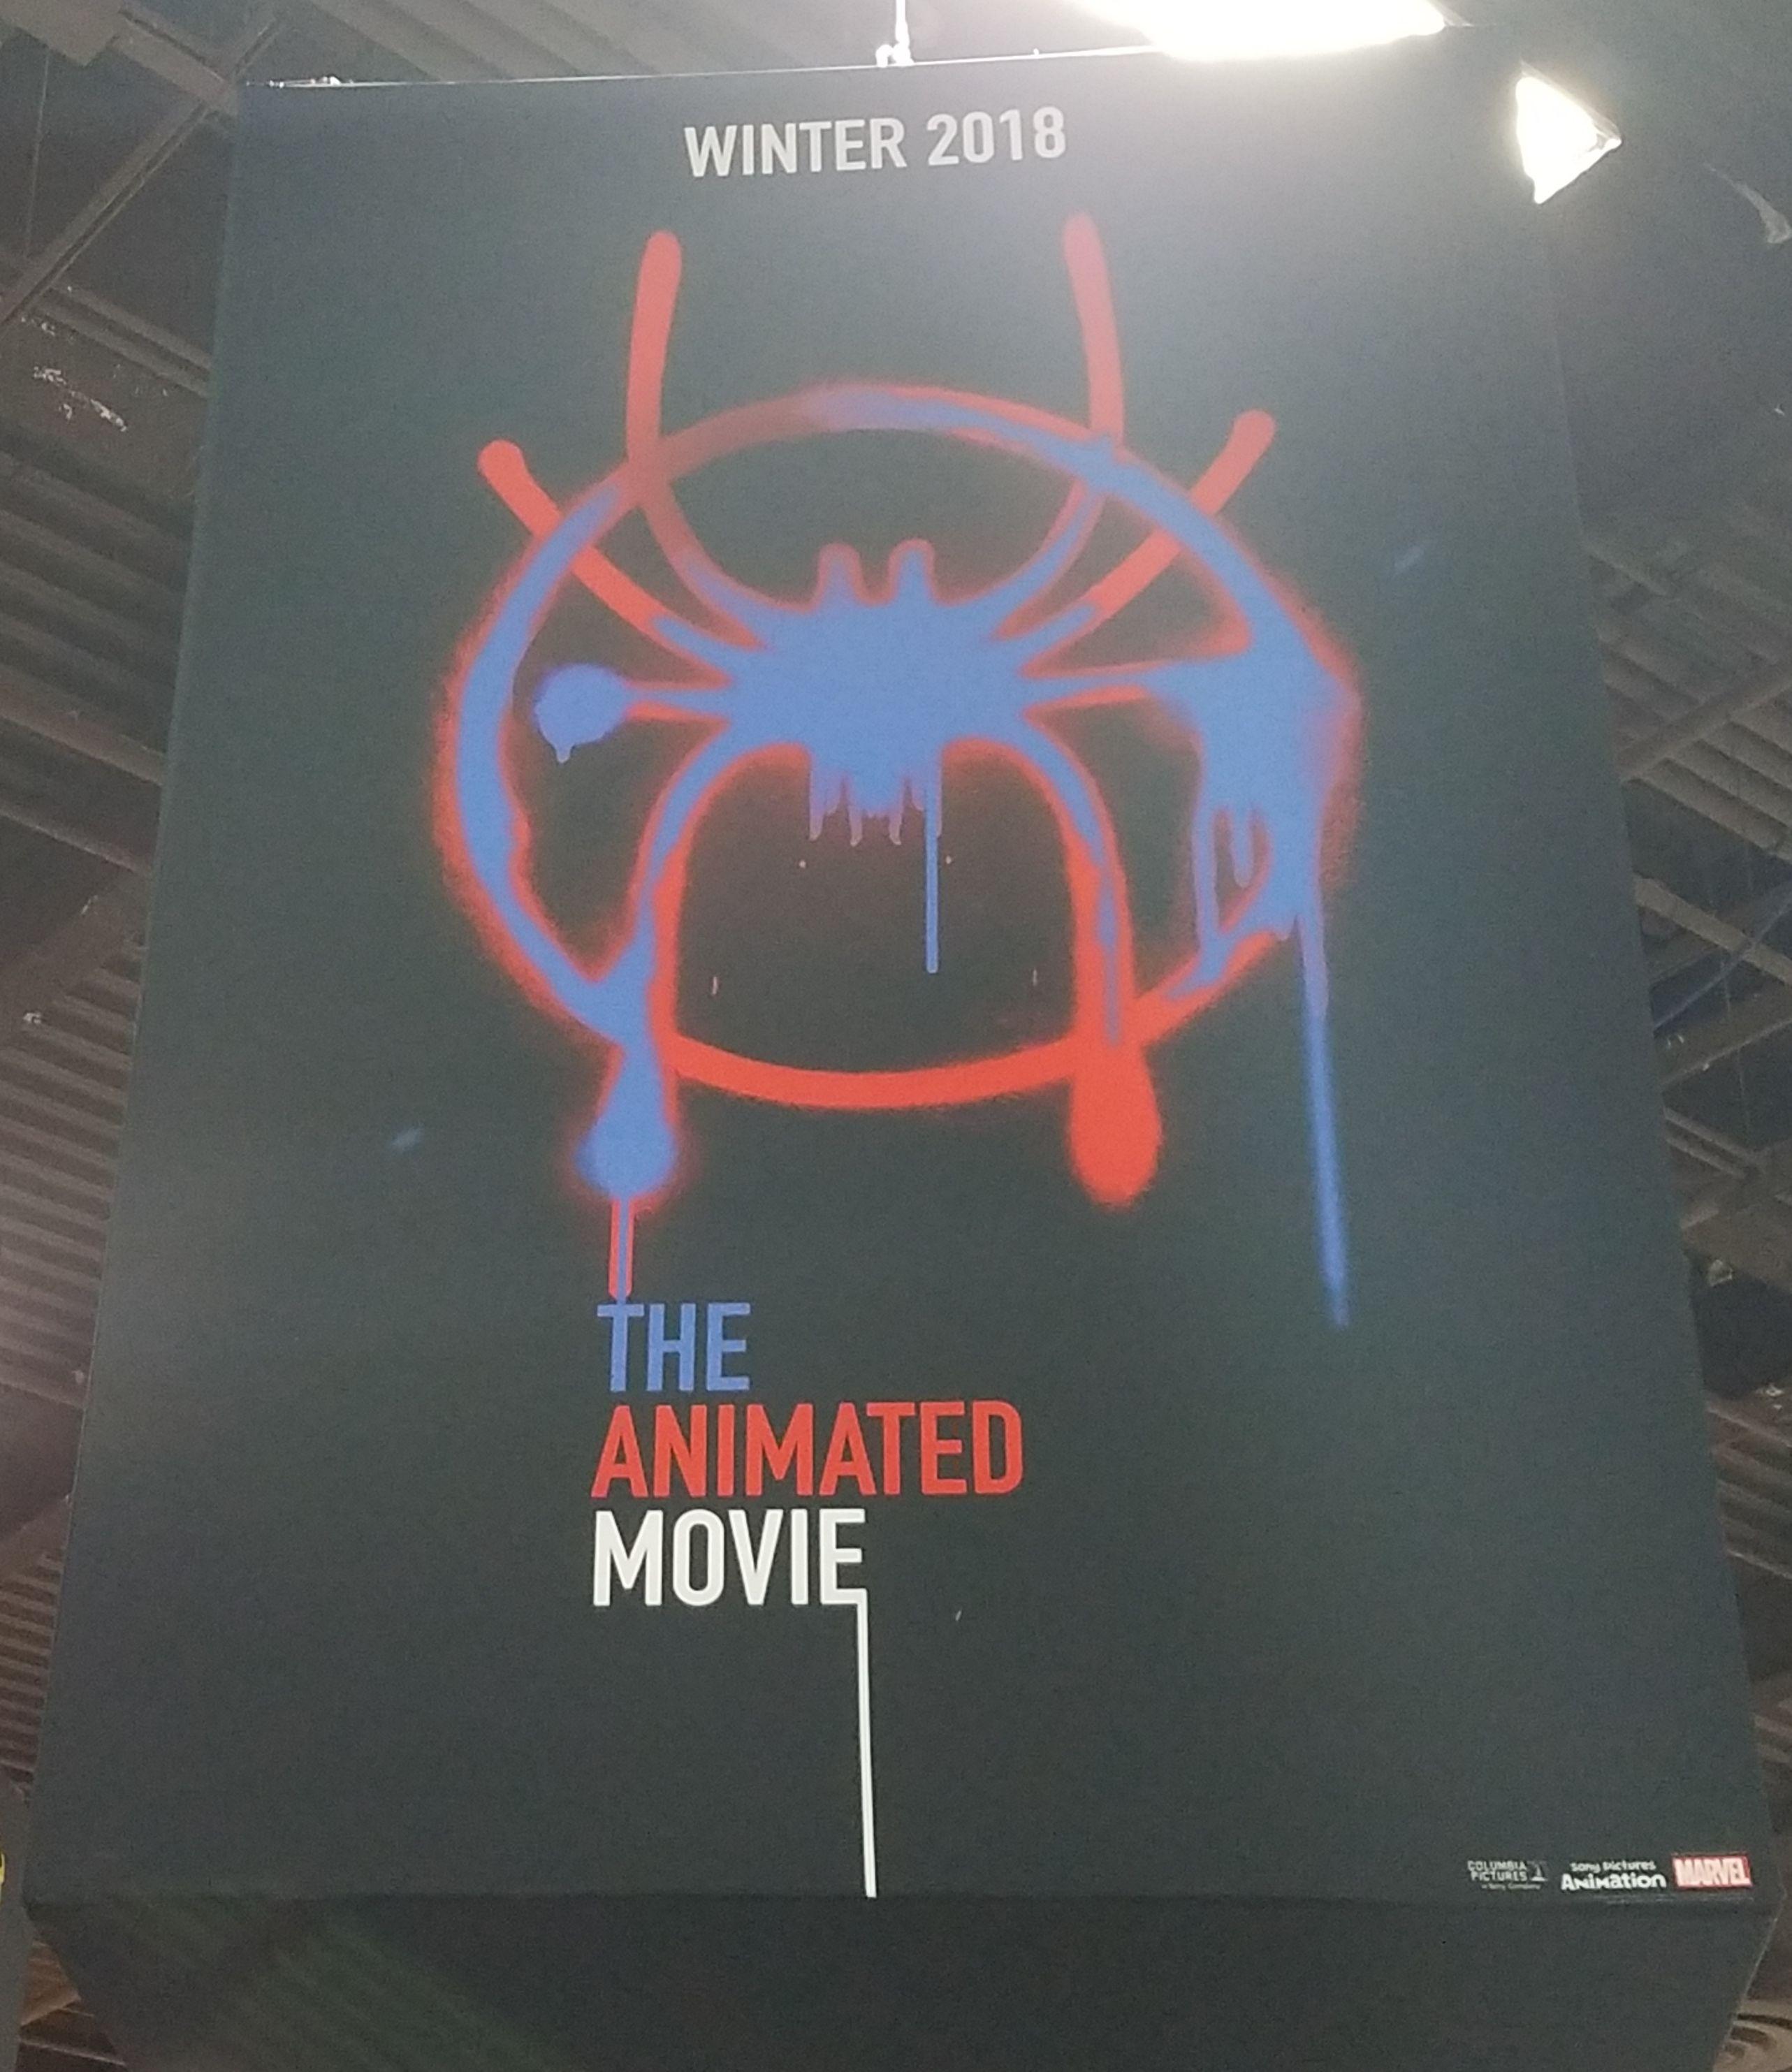 New Spider -Man Logo - UNTITLED ANIMATED SPIDER MAN MOVIE LOGO REVEALED